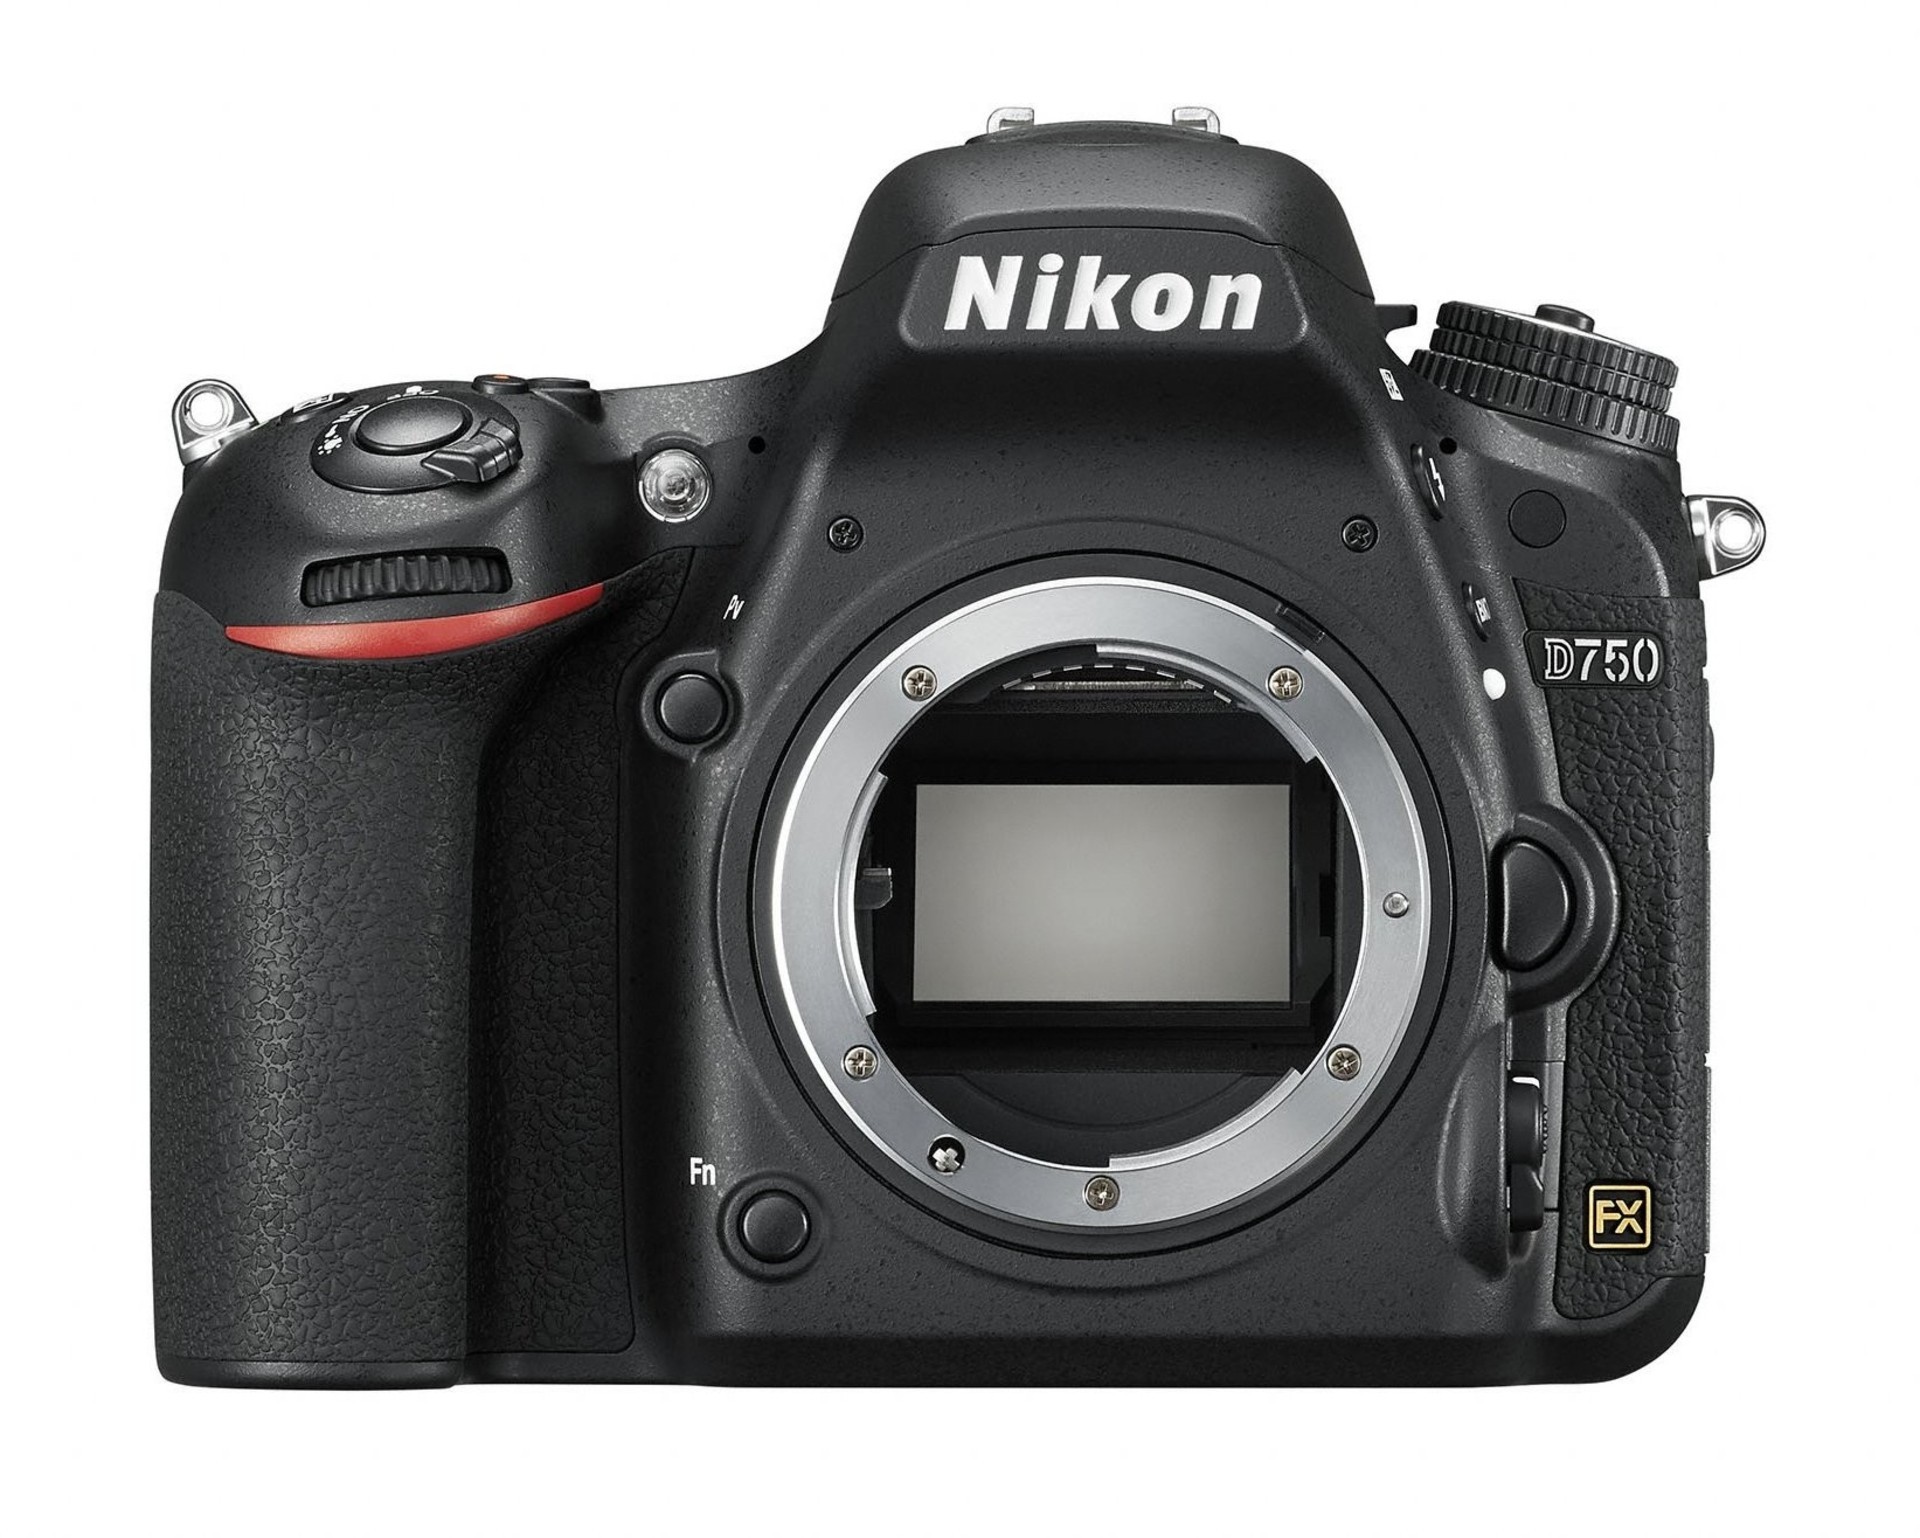 Price Drop Coming For Nikon D750 April 16th